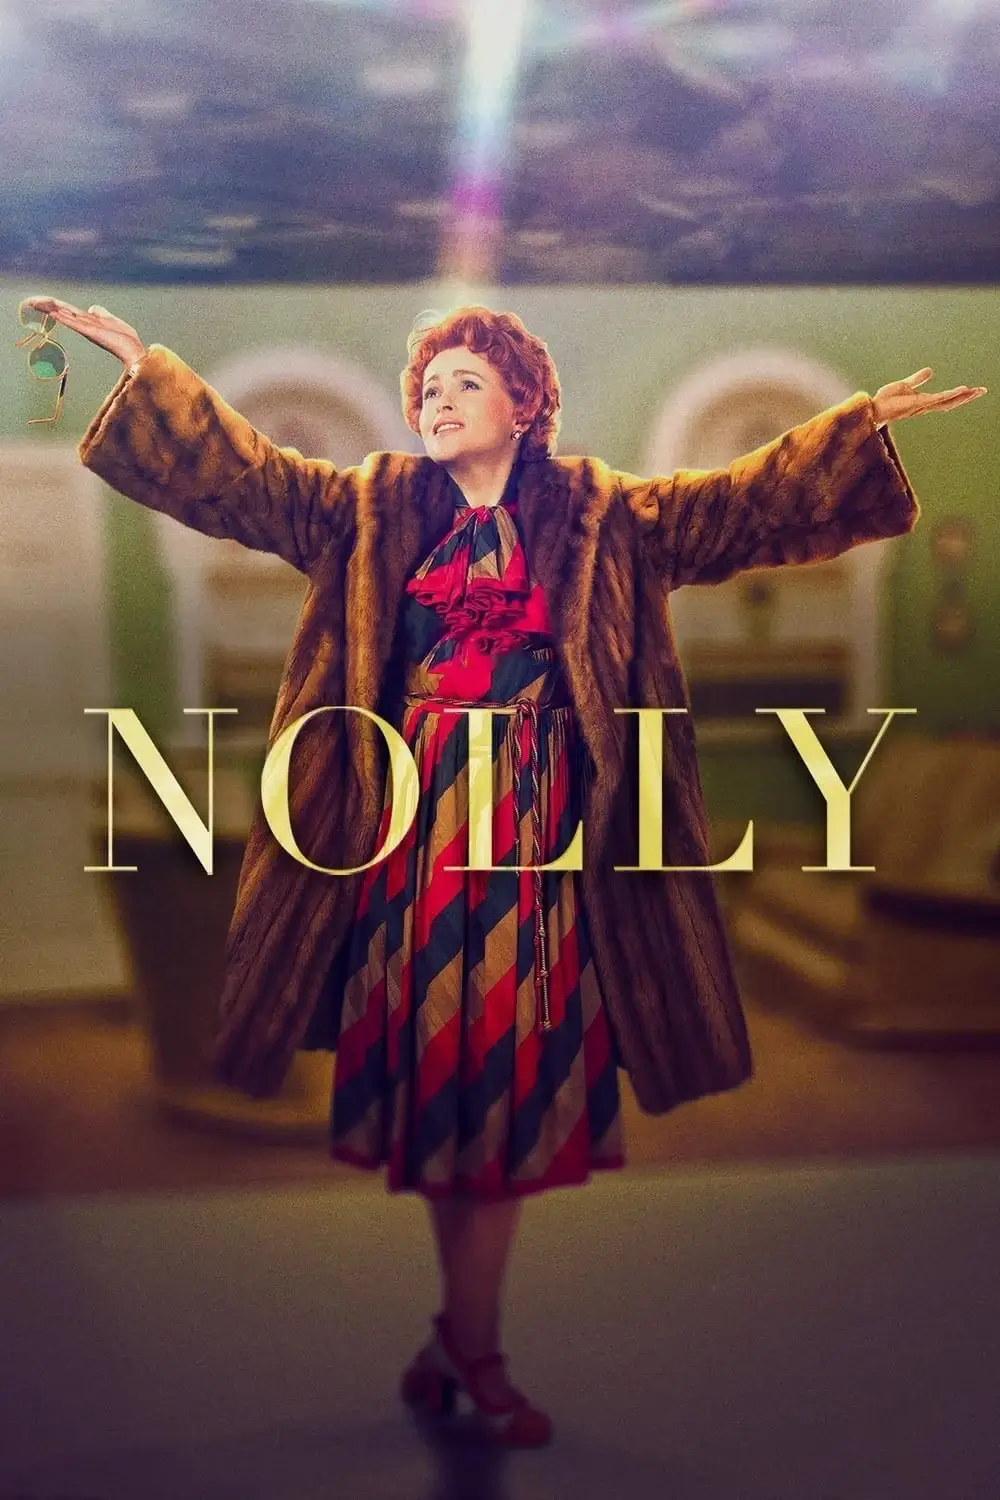 نولی (Nolly)